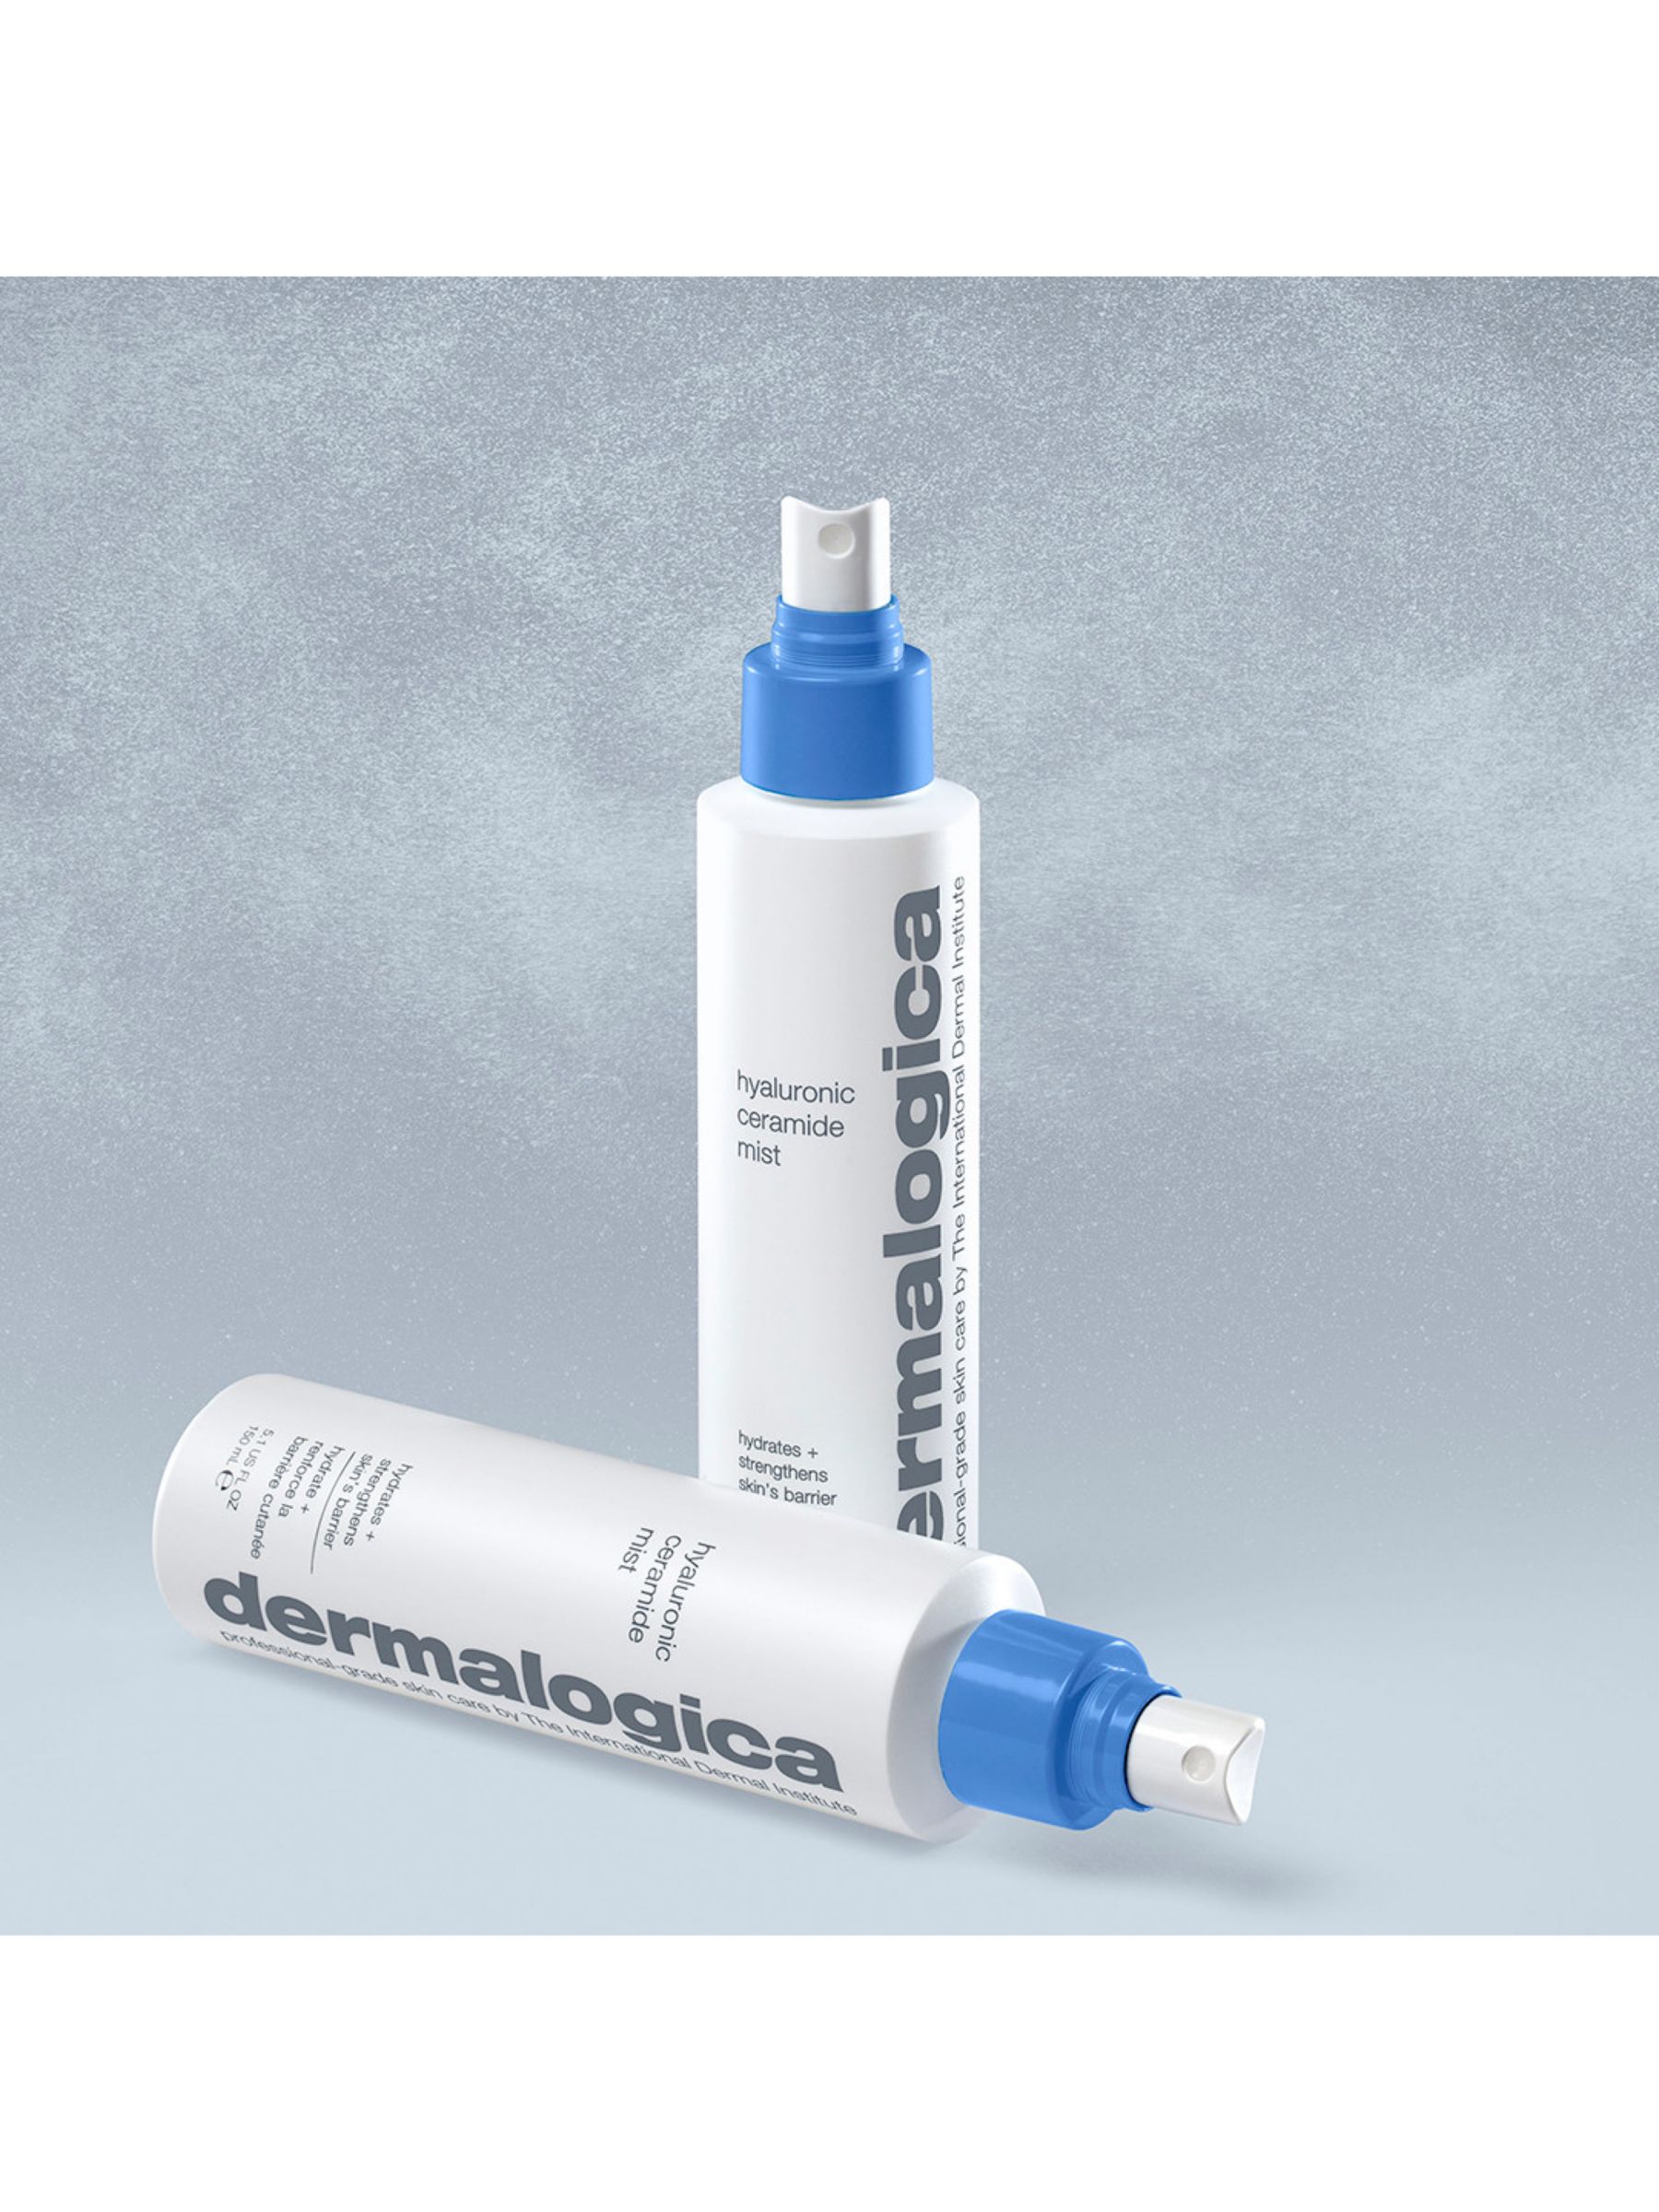 Dermalogica Hyaluronic Ceramide Mist, 150ml